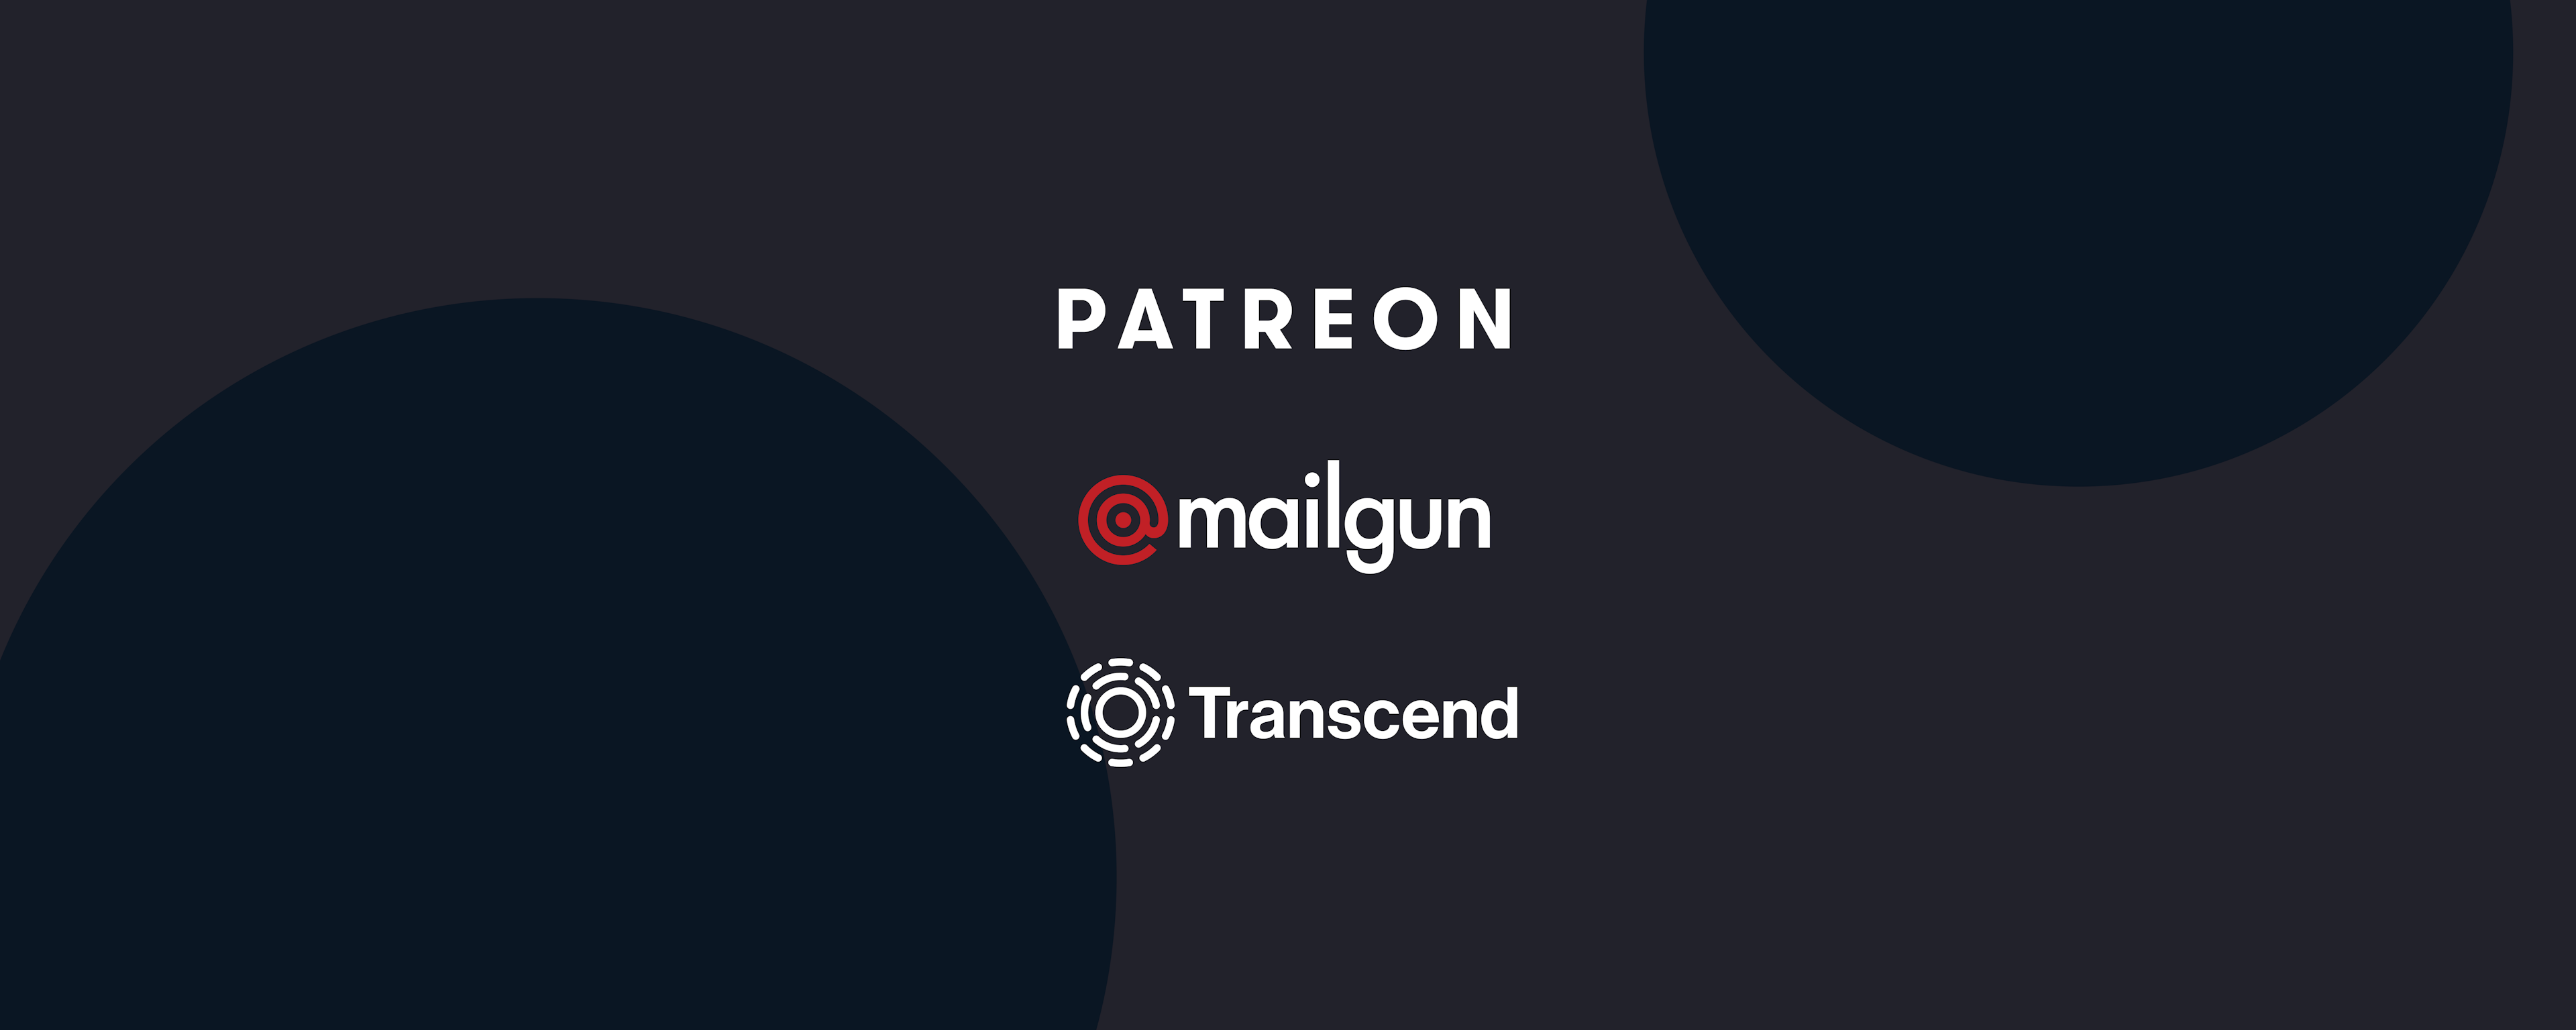 Patreon, Mailgun, and Transcend logos